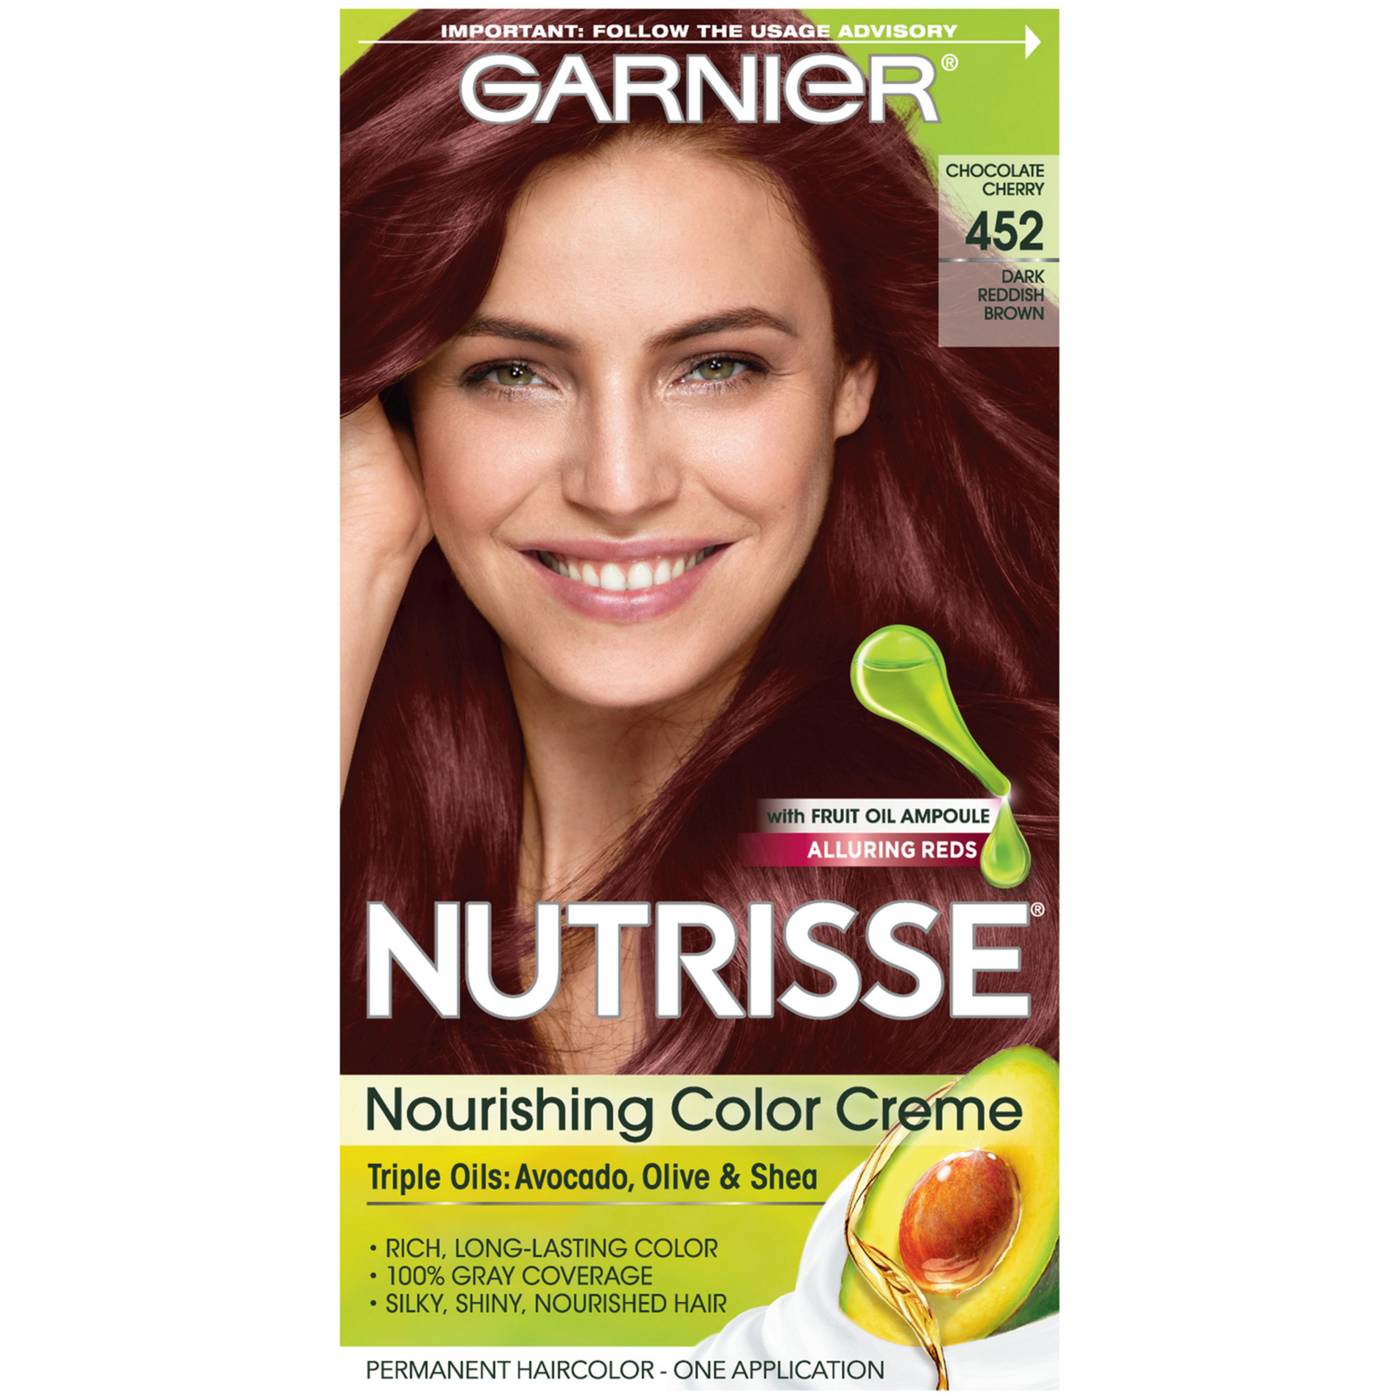 Garnier Nutrisse Nourishing Hair Color Creme with Triple Oils 452 Dark Reddish Brown; image 1 of 11